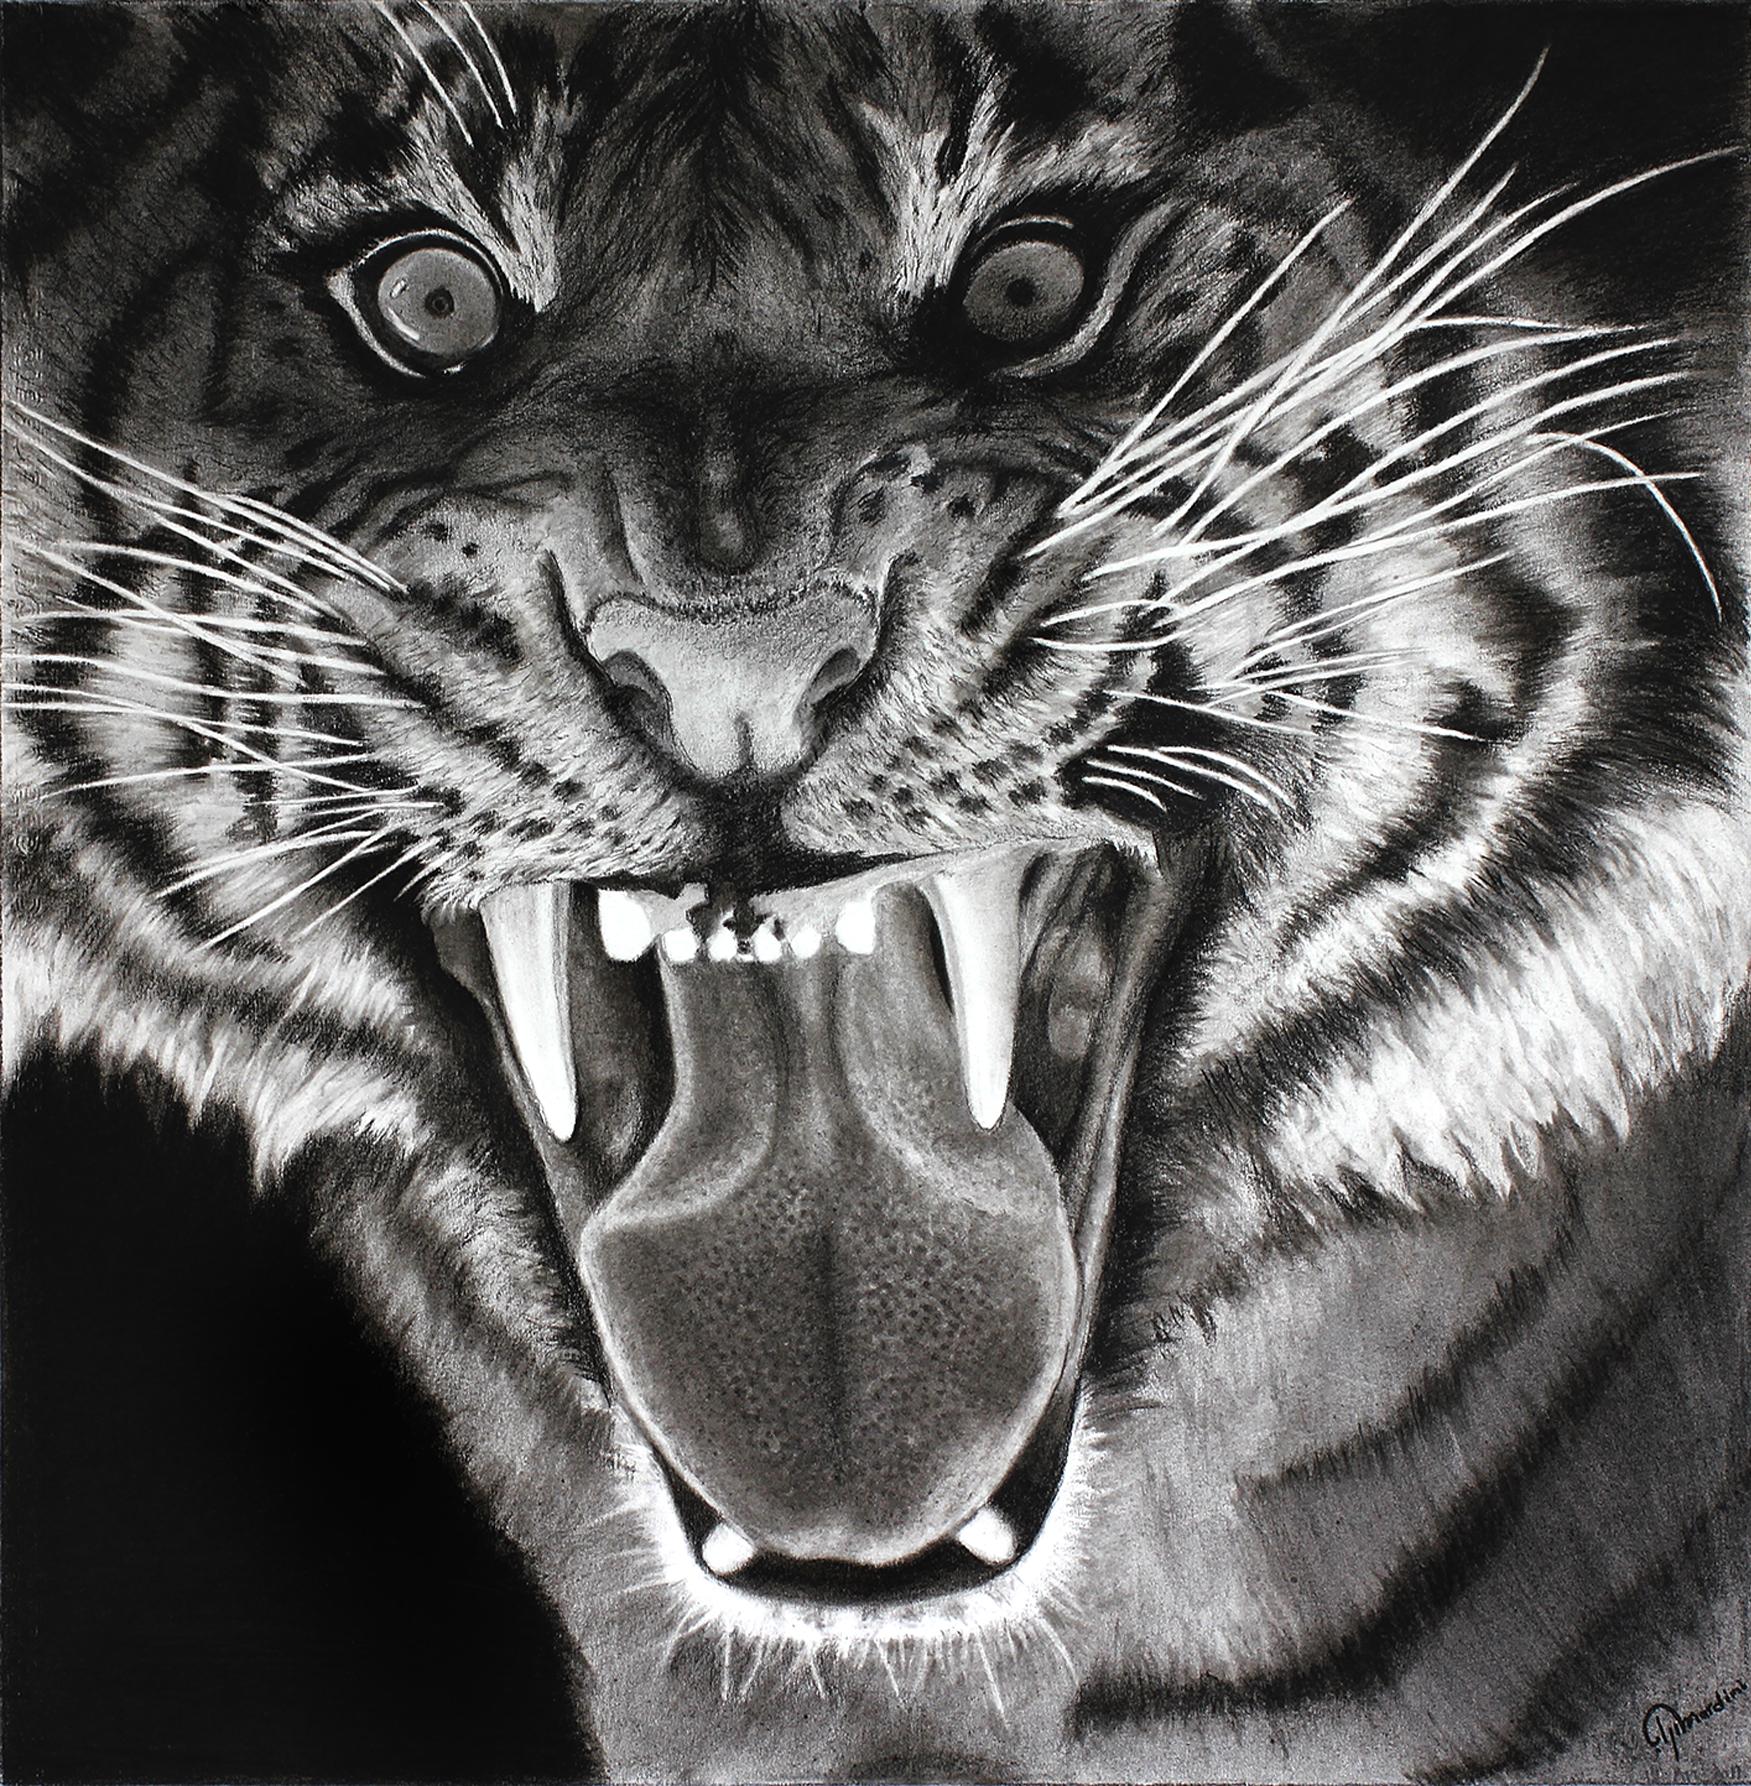 Tiger Sketch Images  Free Download on Freepik